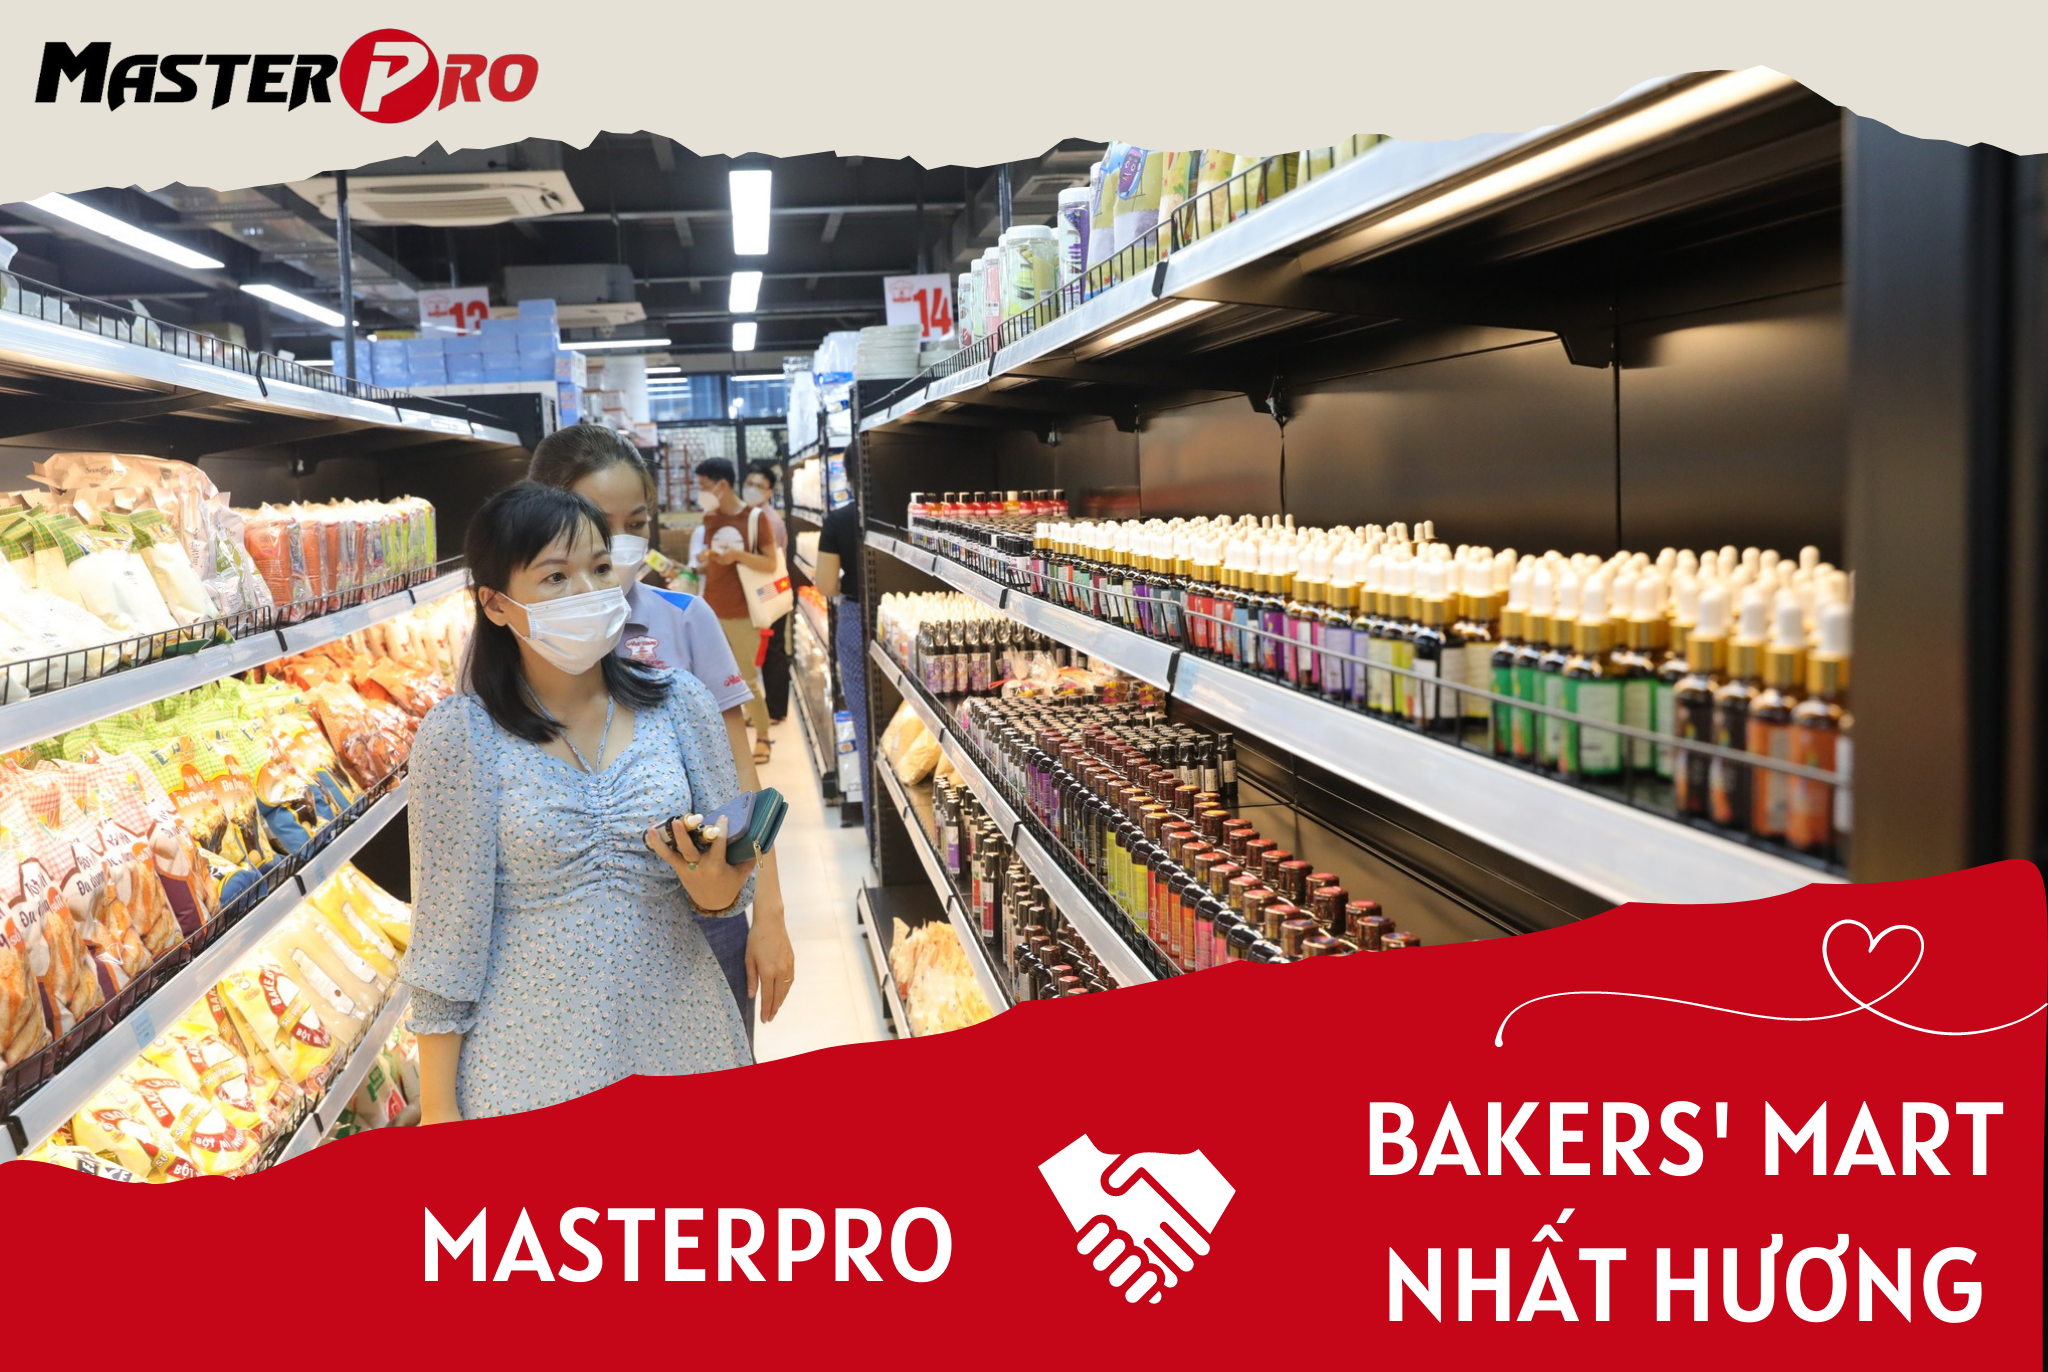 MasterPro hợp tác cùng Bakers' Mart Nhất Hương